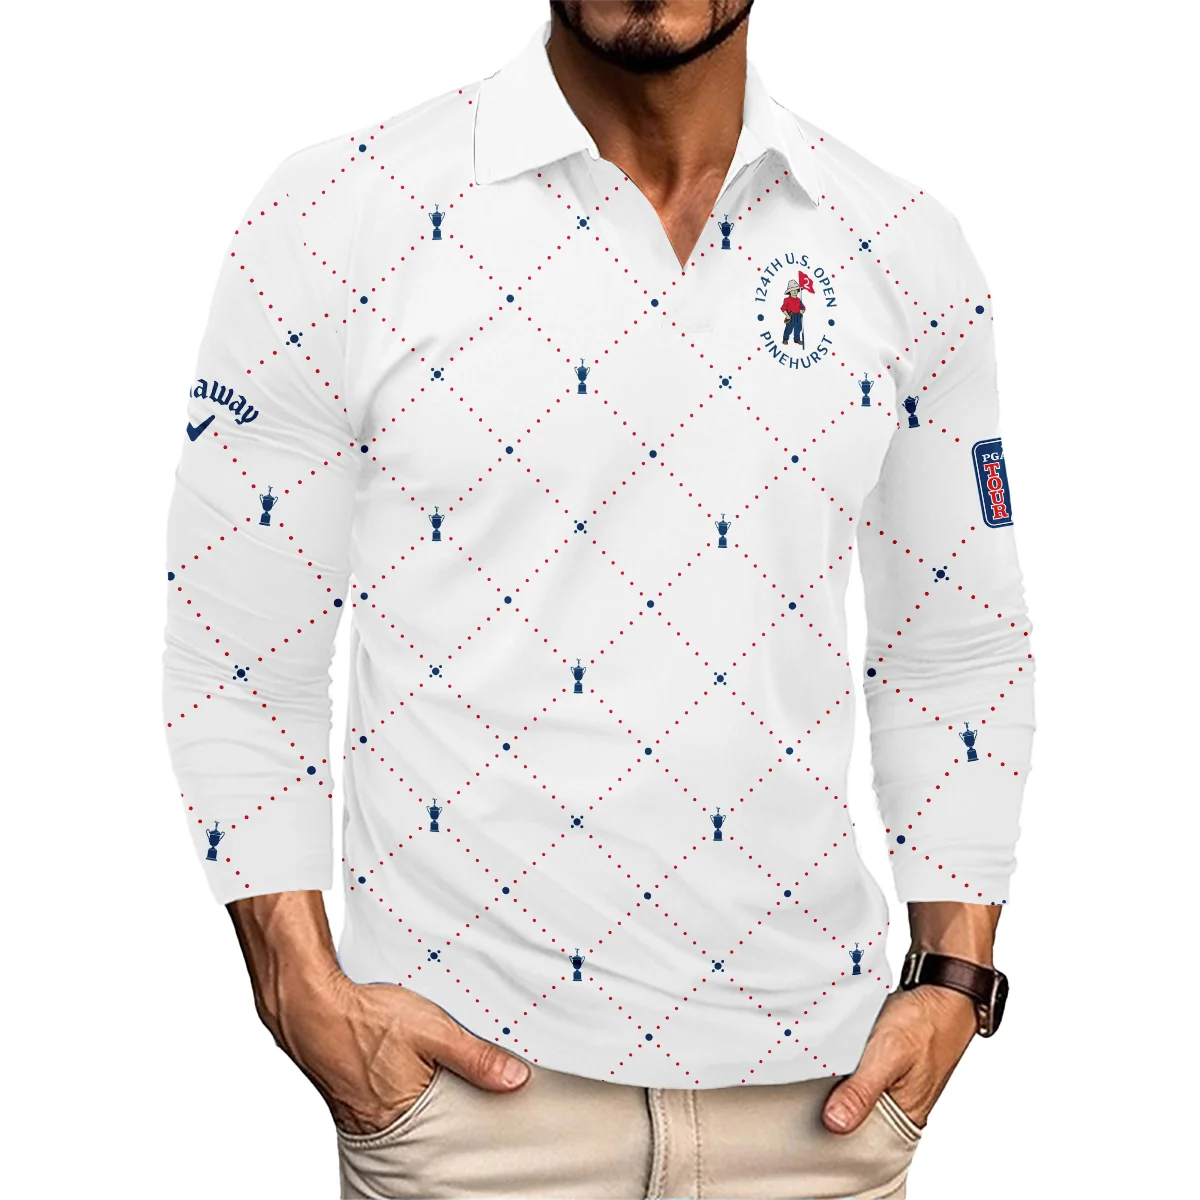 Argyle Pattern With Cup 124th U.S. Open Pinehurst Callaway Zipper Hoodie Shirt Style Classic Zipper Hoodie Shirt